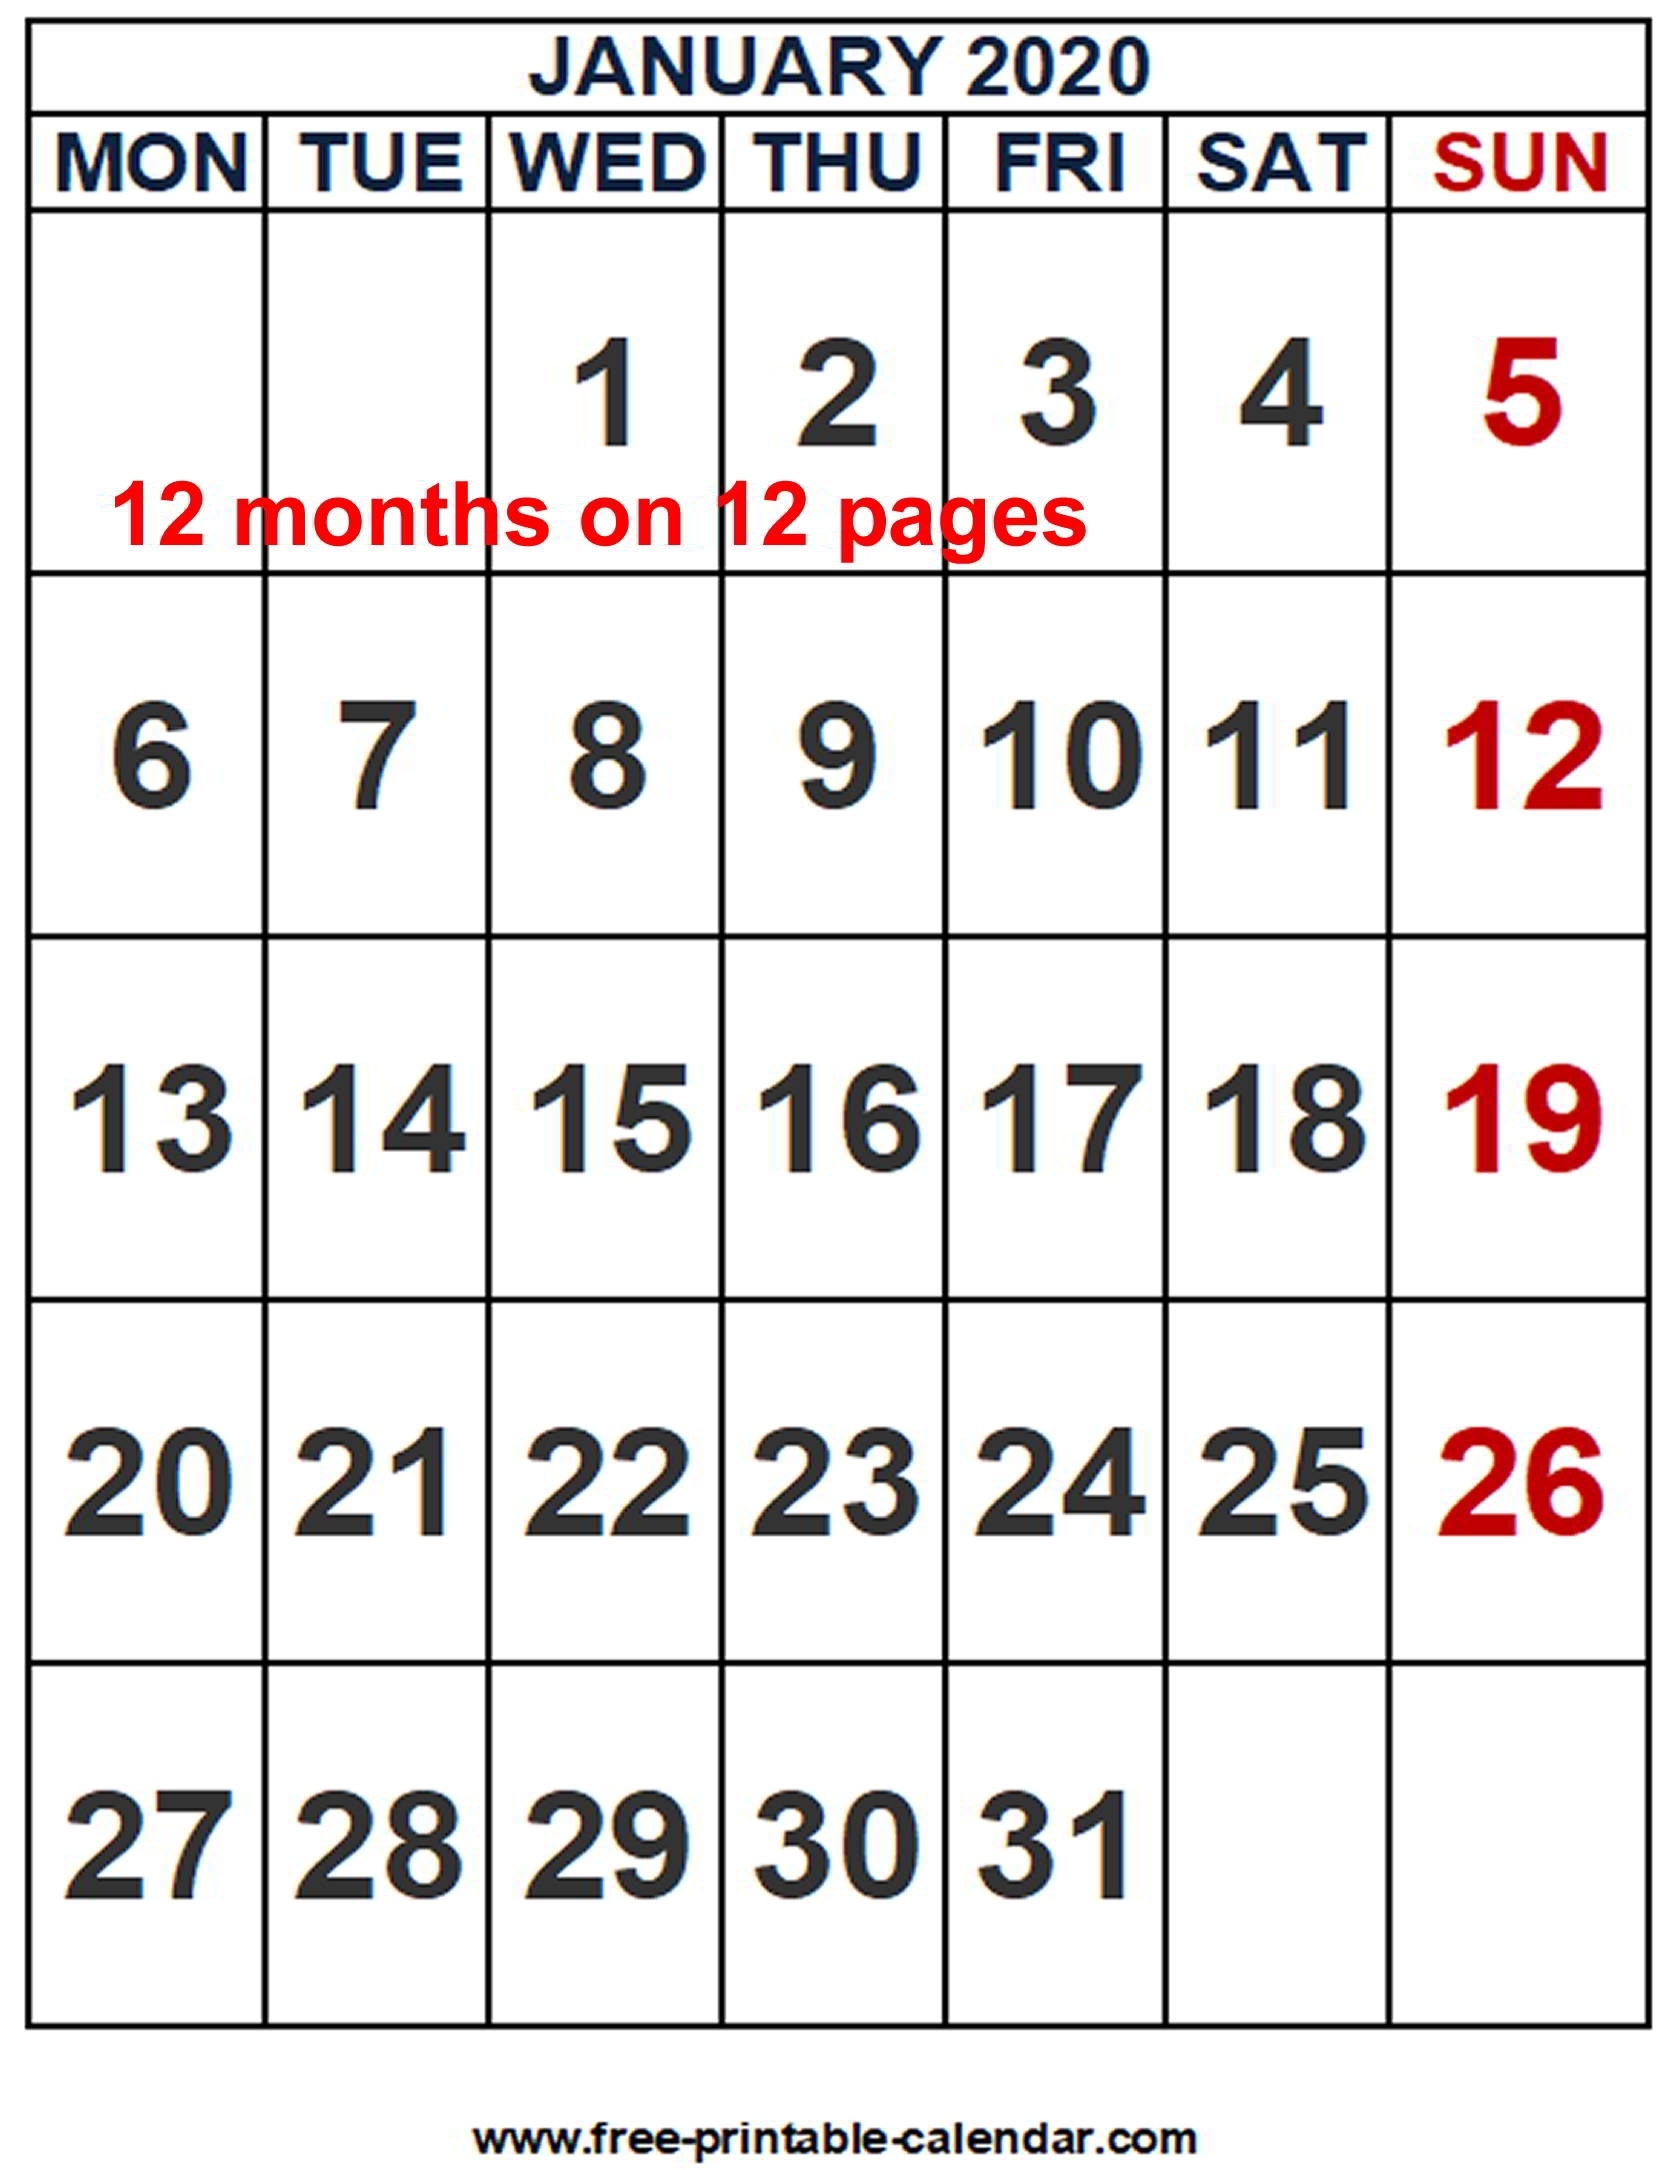 2020 Calendar Word Template - Free-Printable-Calendar Incredible Microsoft Word 2020 Calendar Template